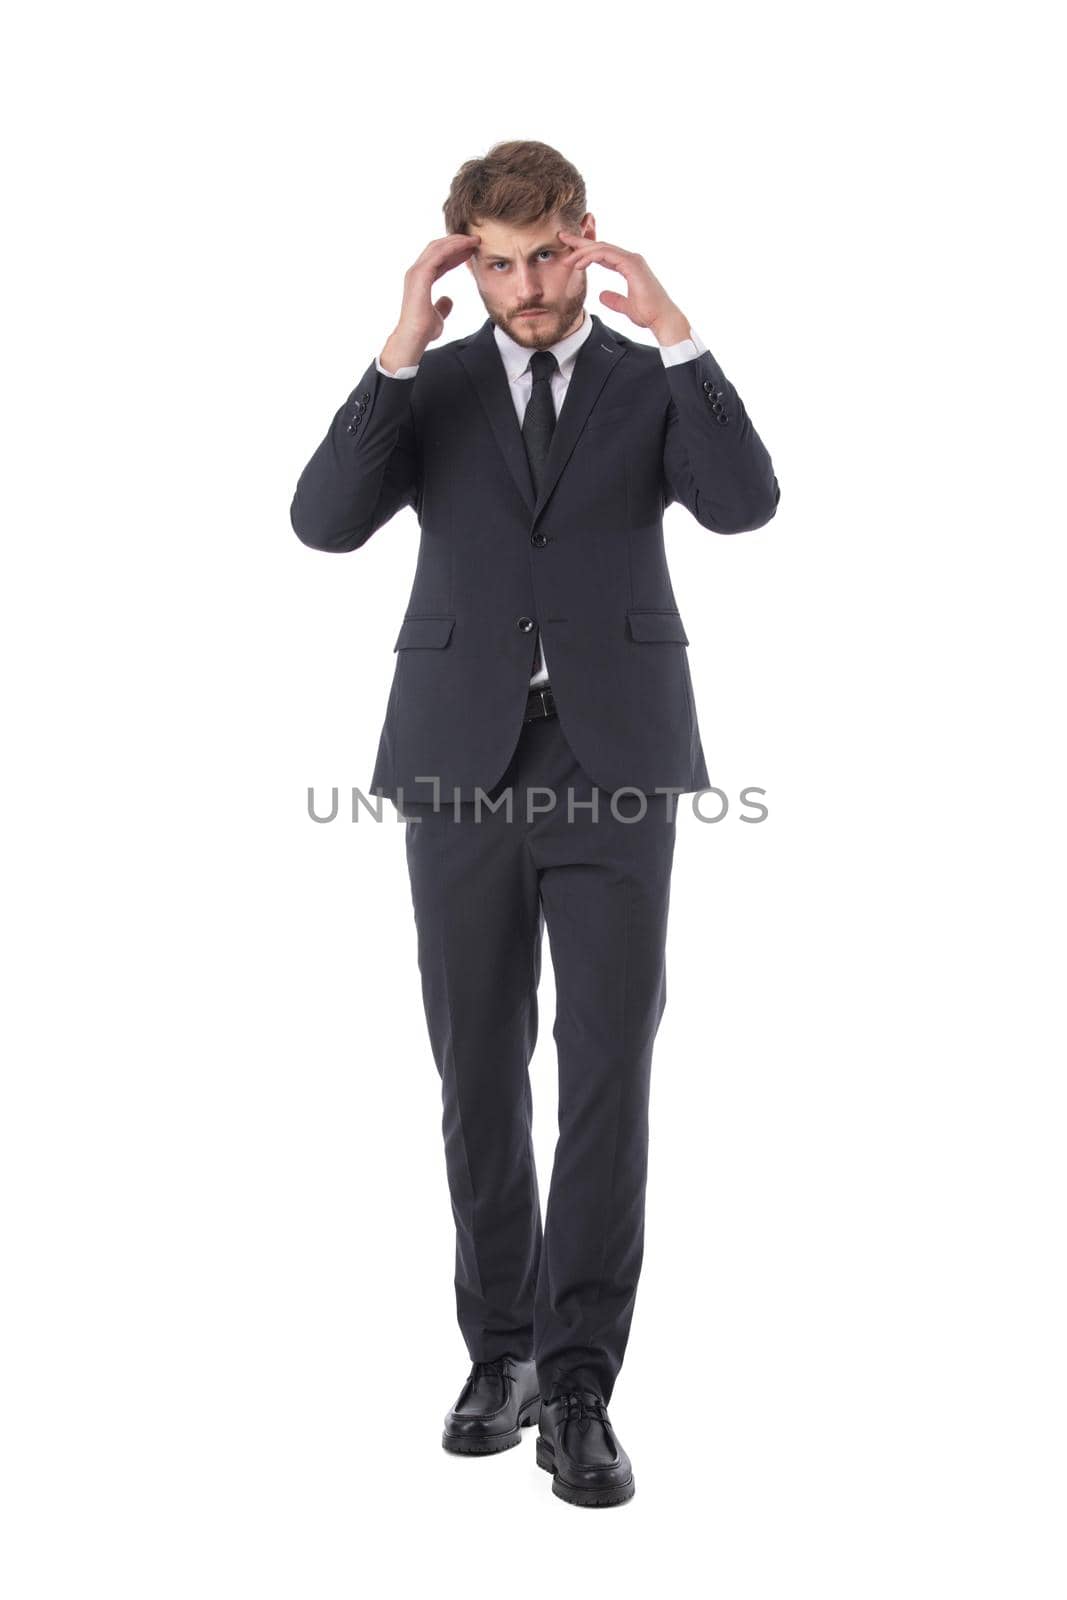 Businessman having a headache full length studio portrait isolated on white background